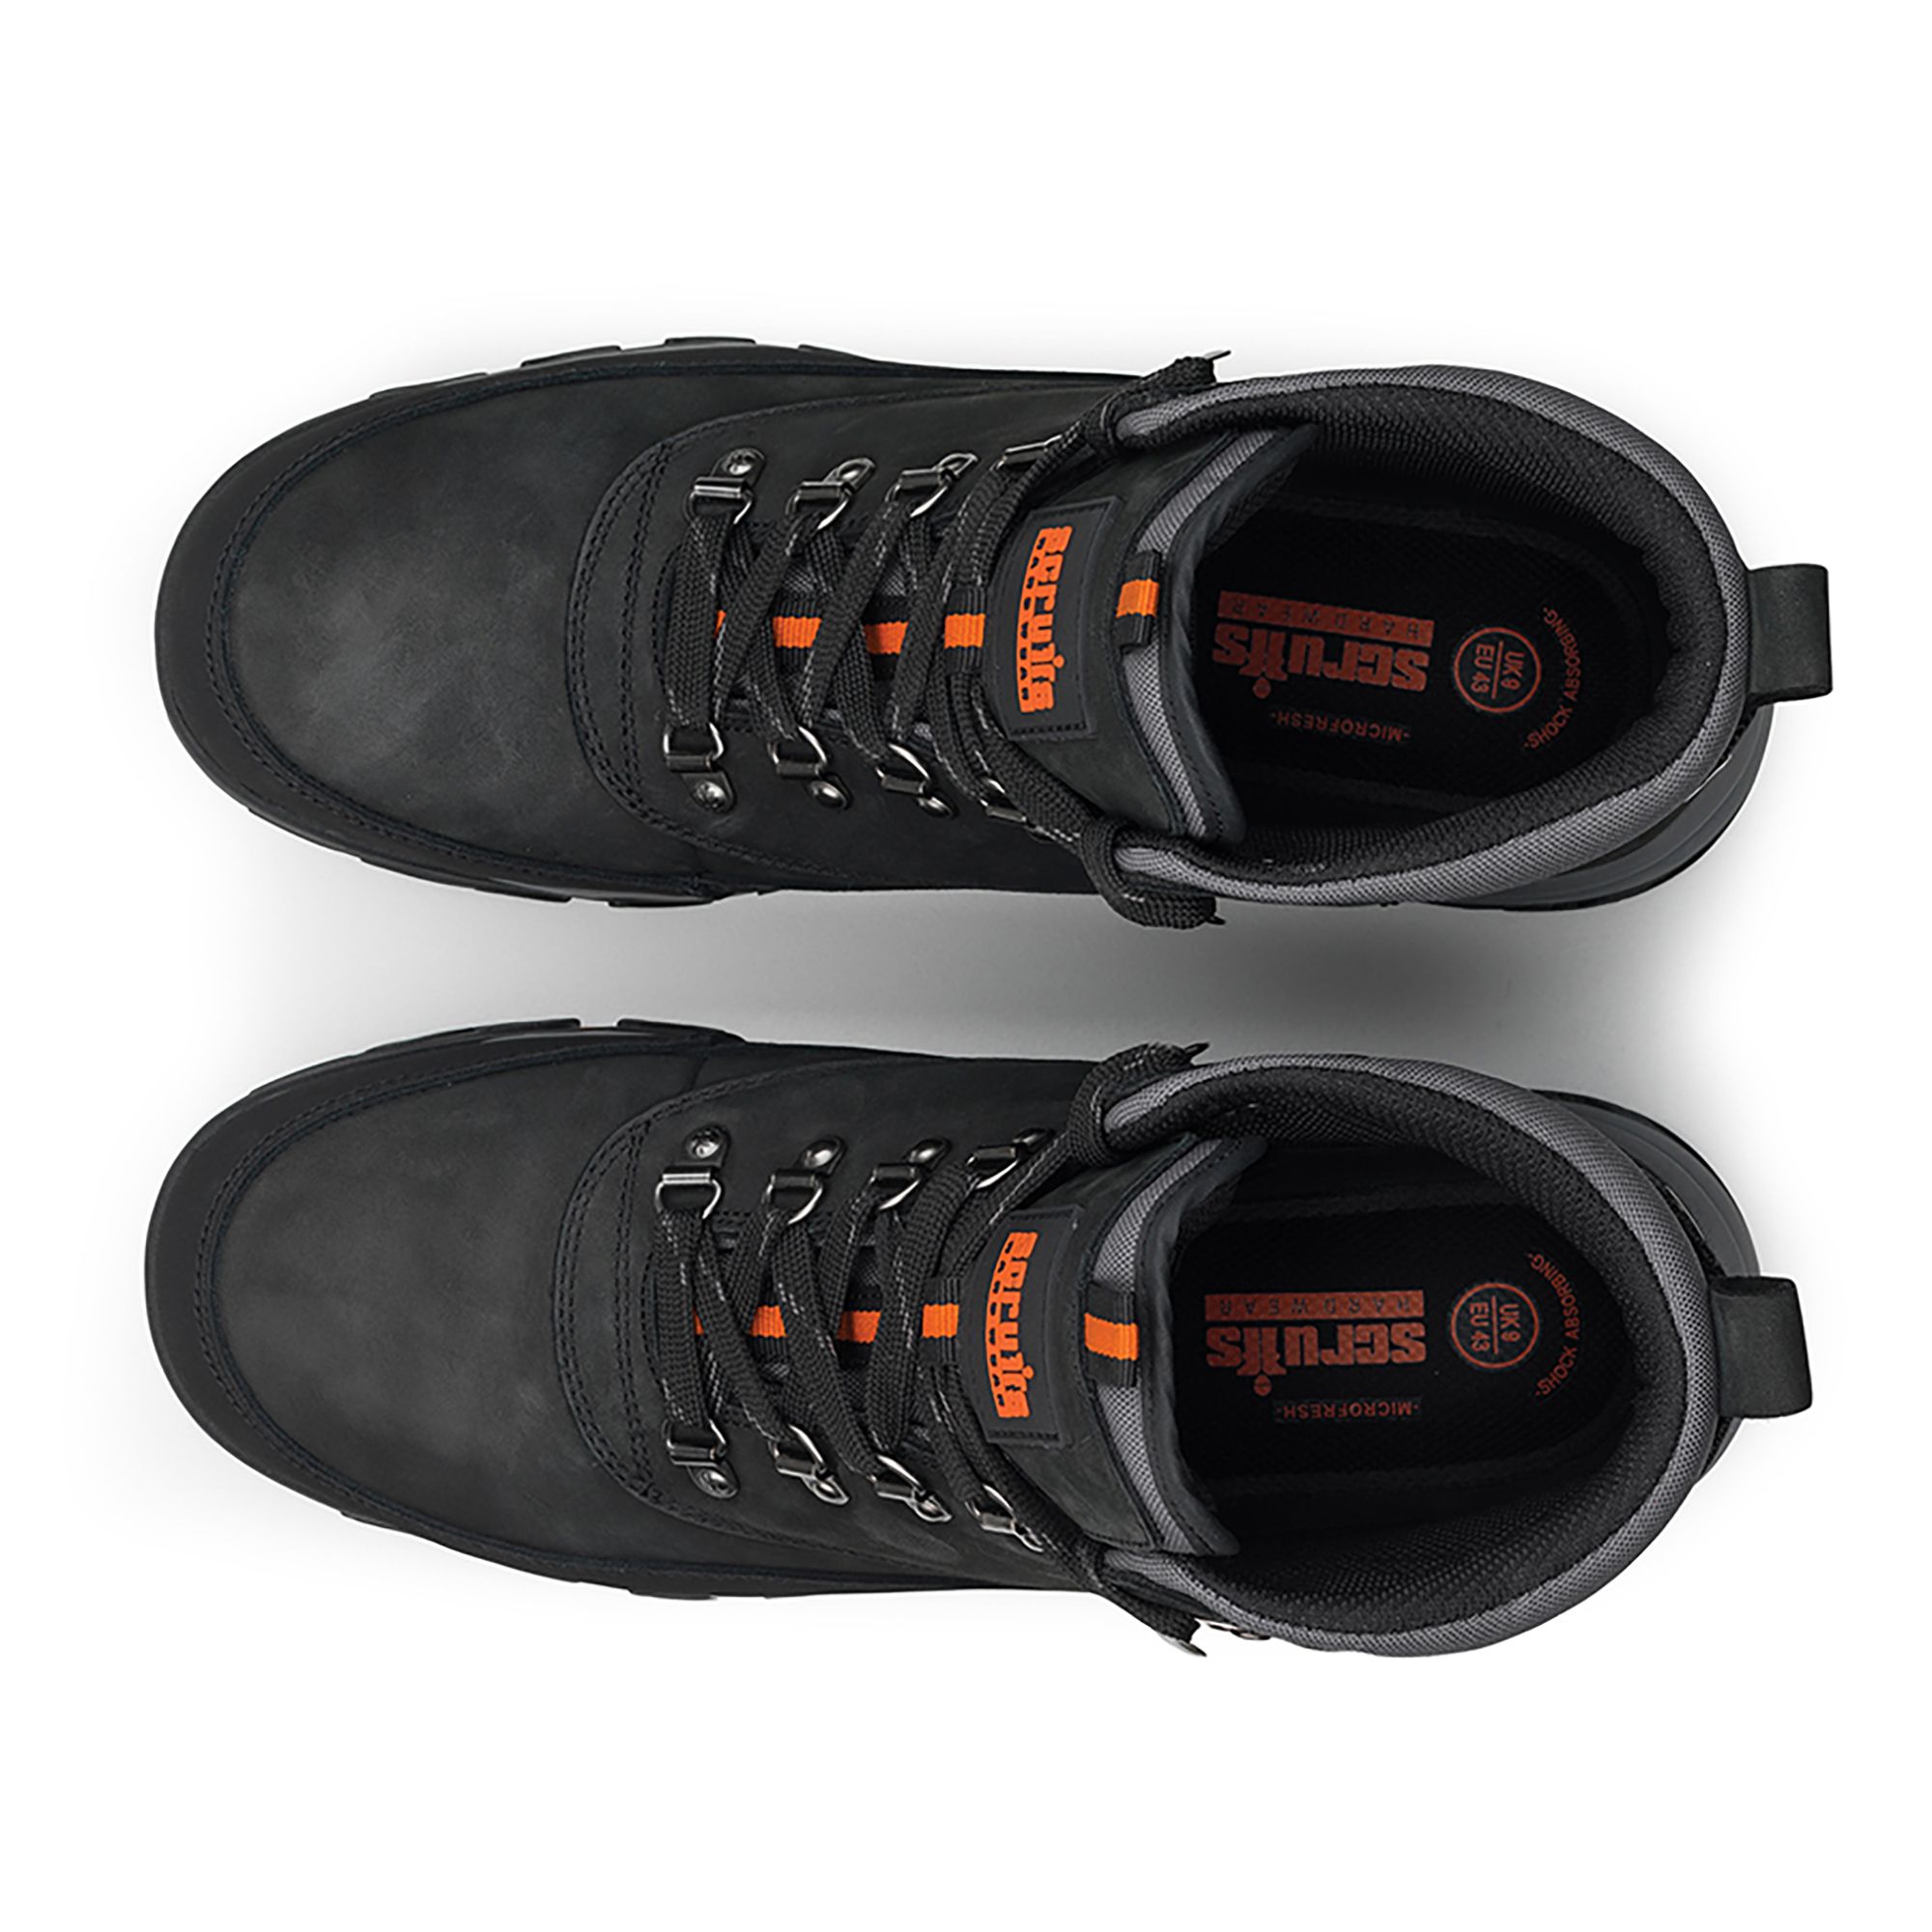 Scruffs Scarfell Men's Black Safety boots, Size 12